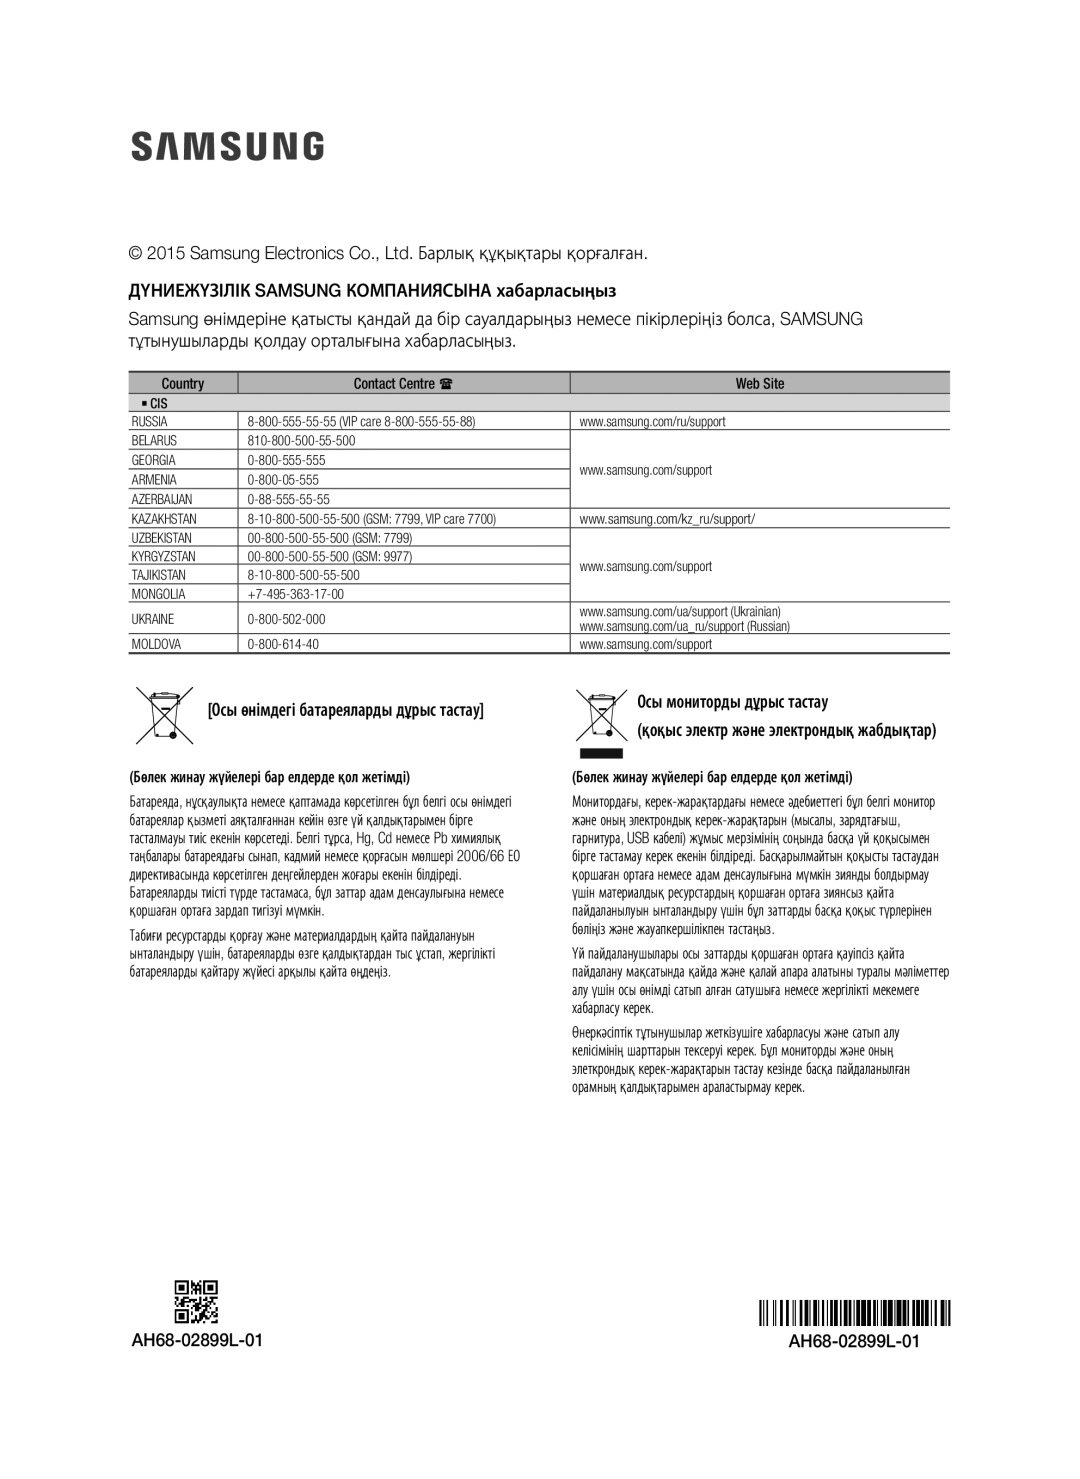 Samsung HW-J7500/RU manual Осы мониторды дұрыс тастау, AH68-02899L-01 